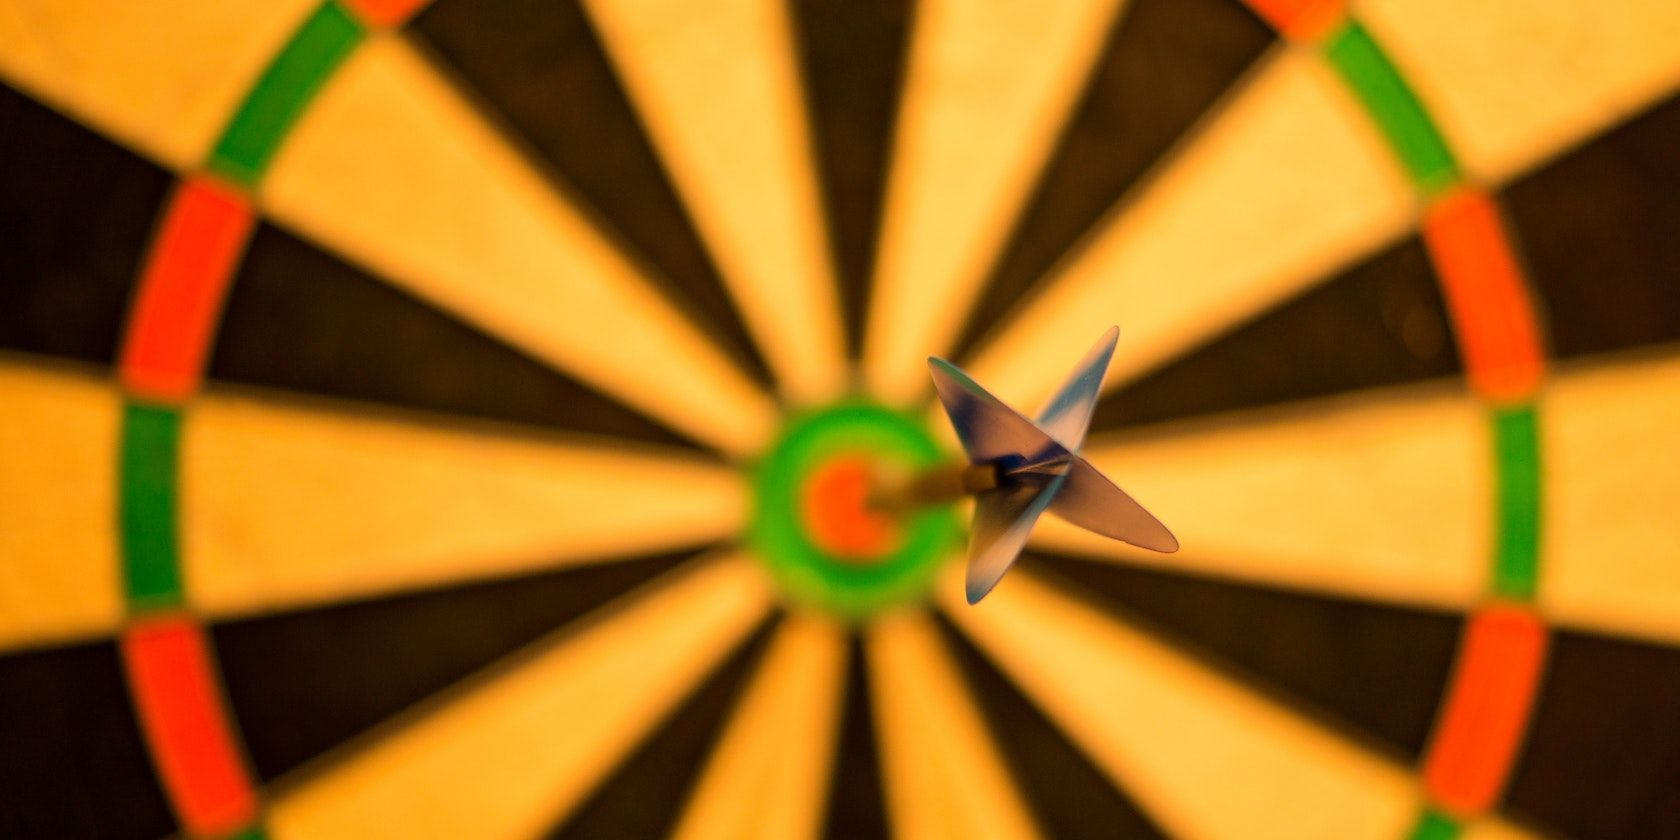 A dart in the center of a dartboard